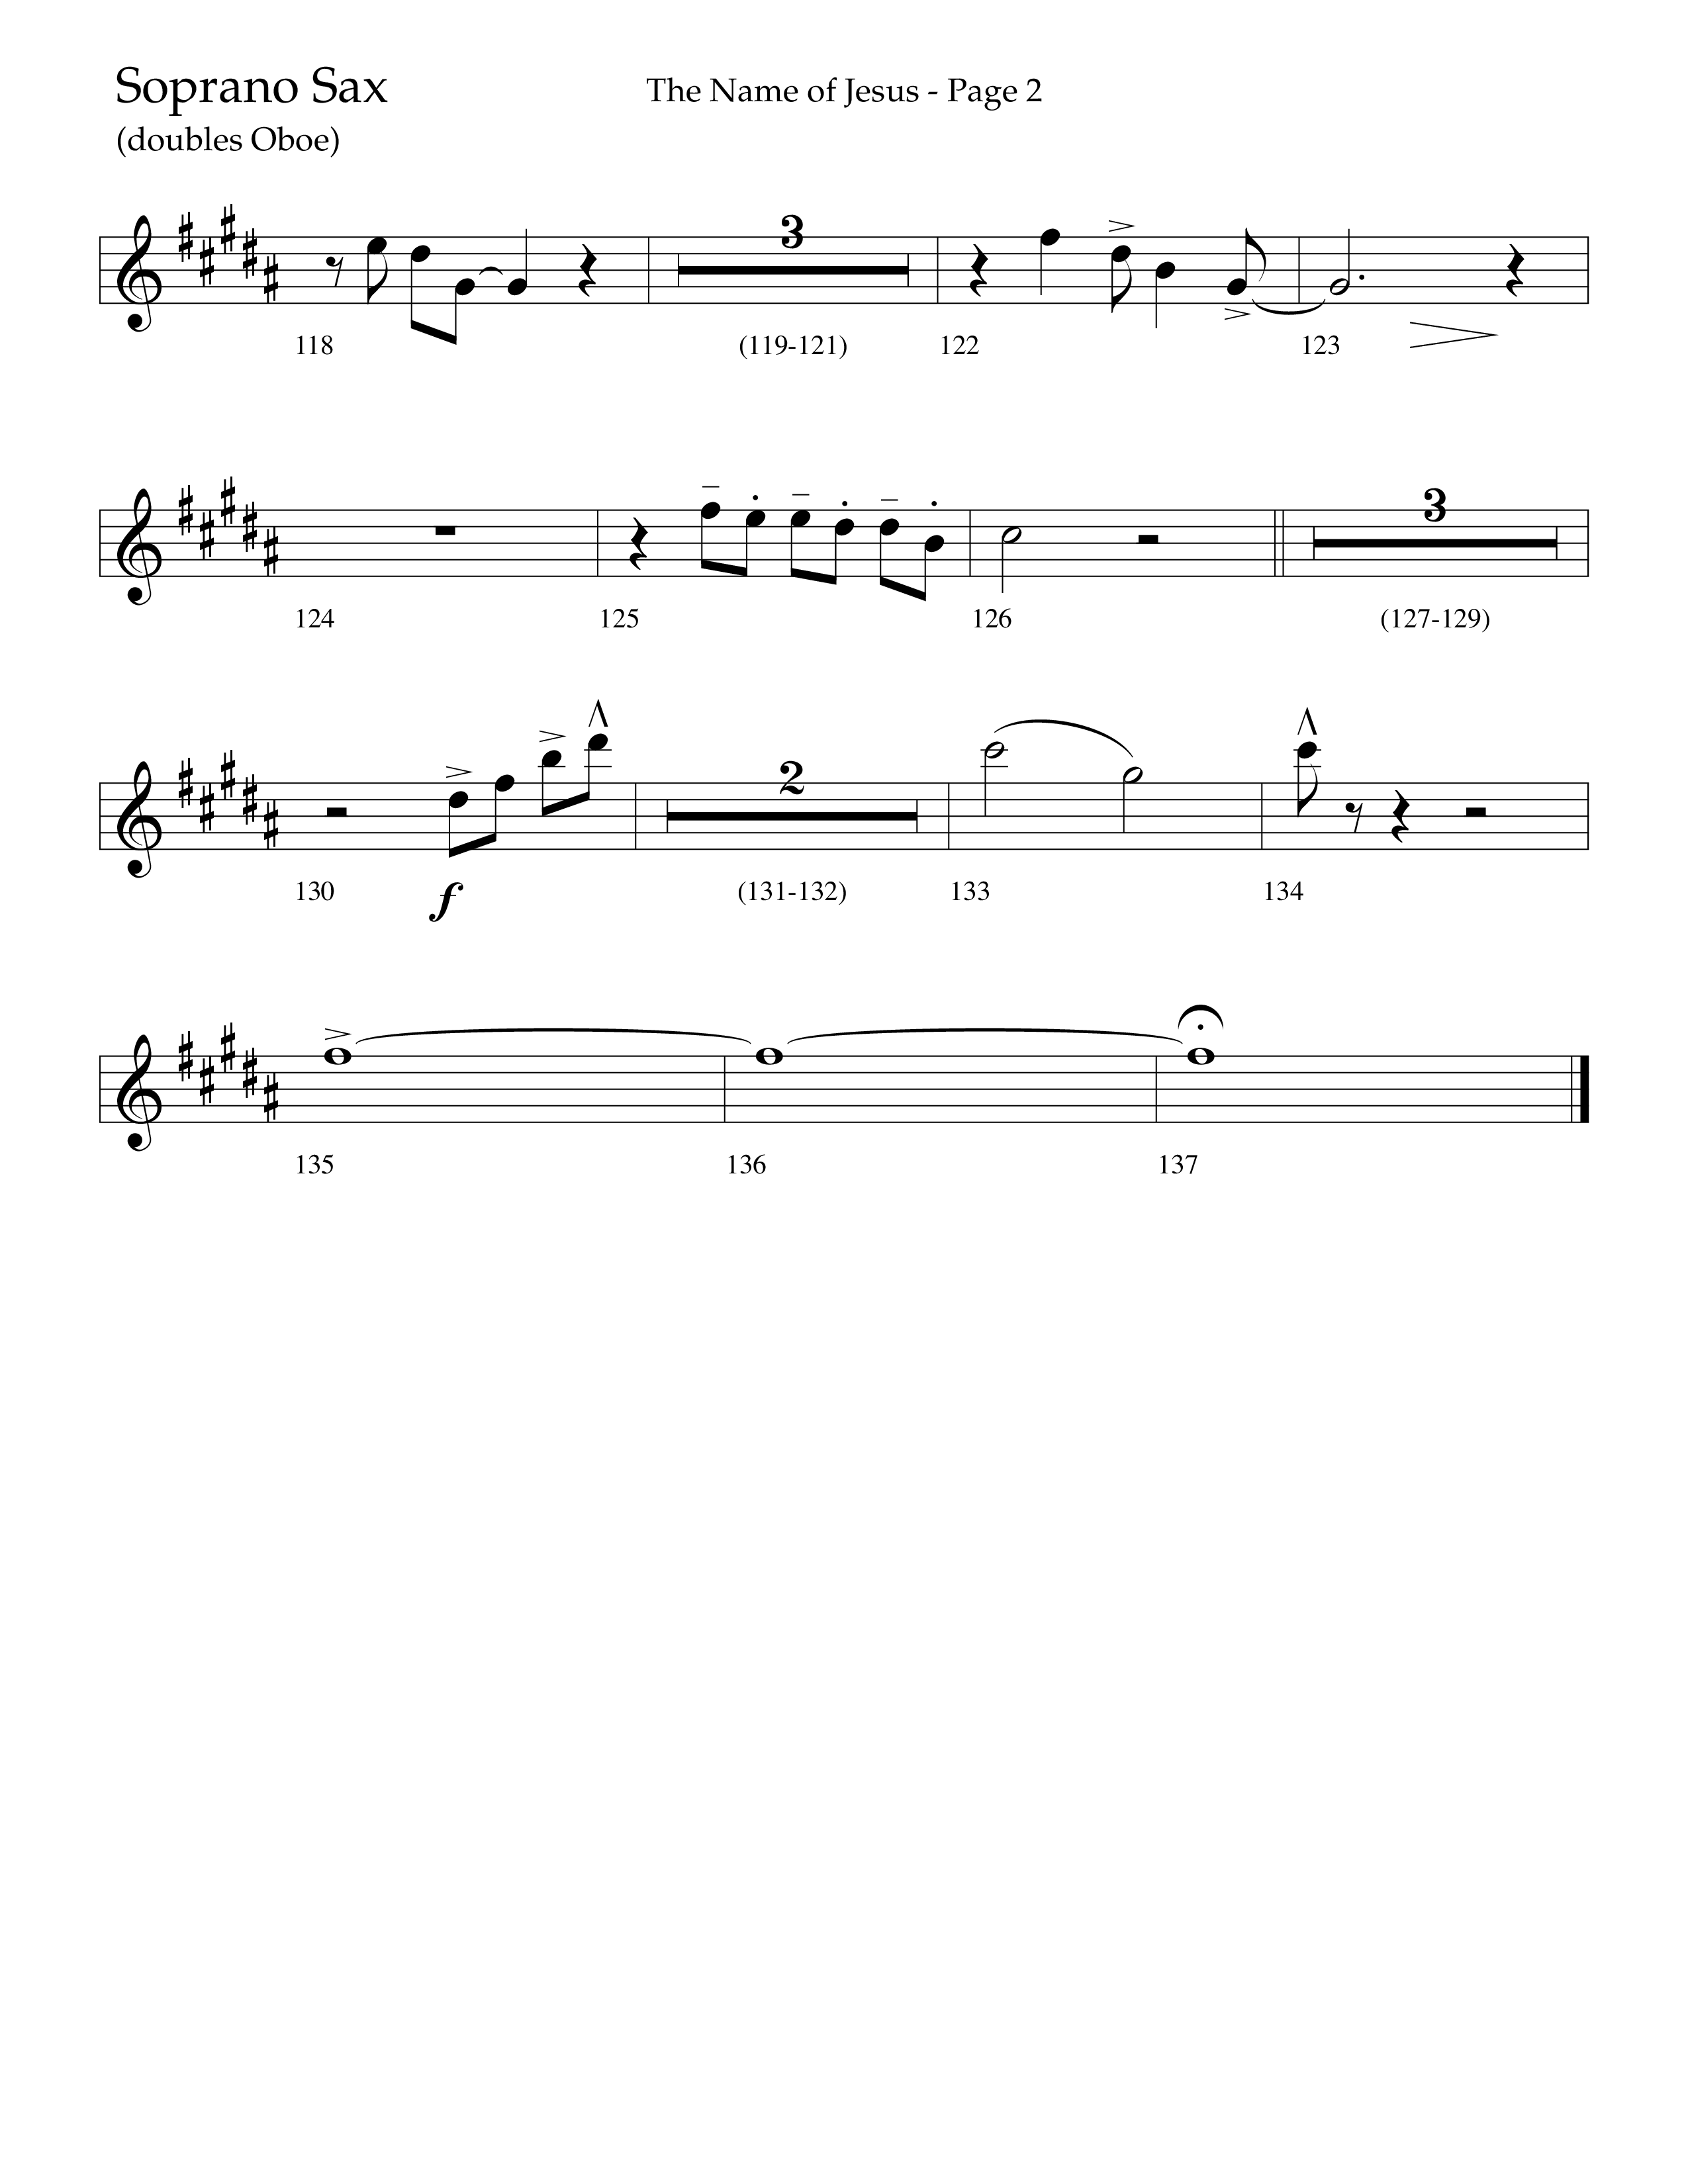 The Name Of Jesus (Choral Anthem SATB) Soprano Sax (Lifeway Choral / Arr. Travis Cottrell / Orch. Scott Harris)